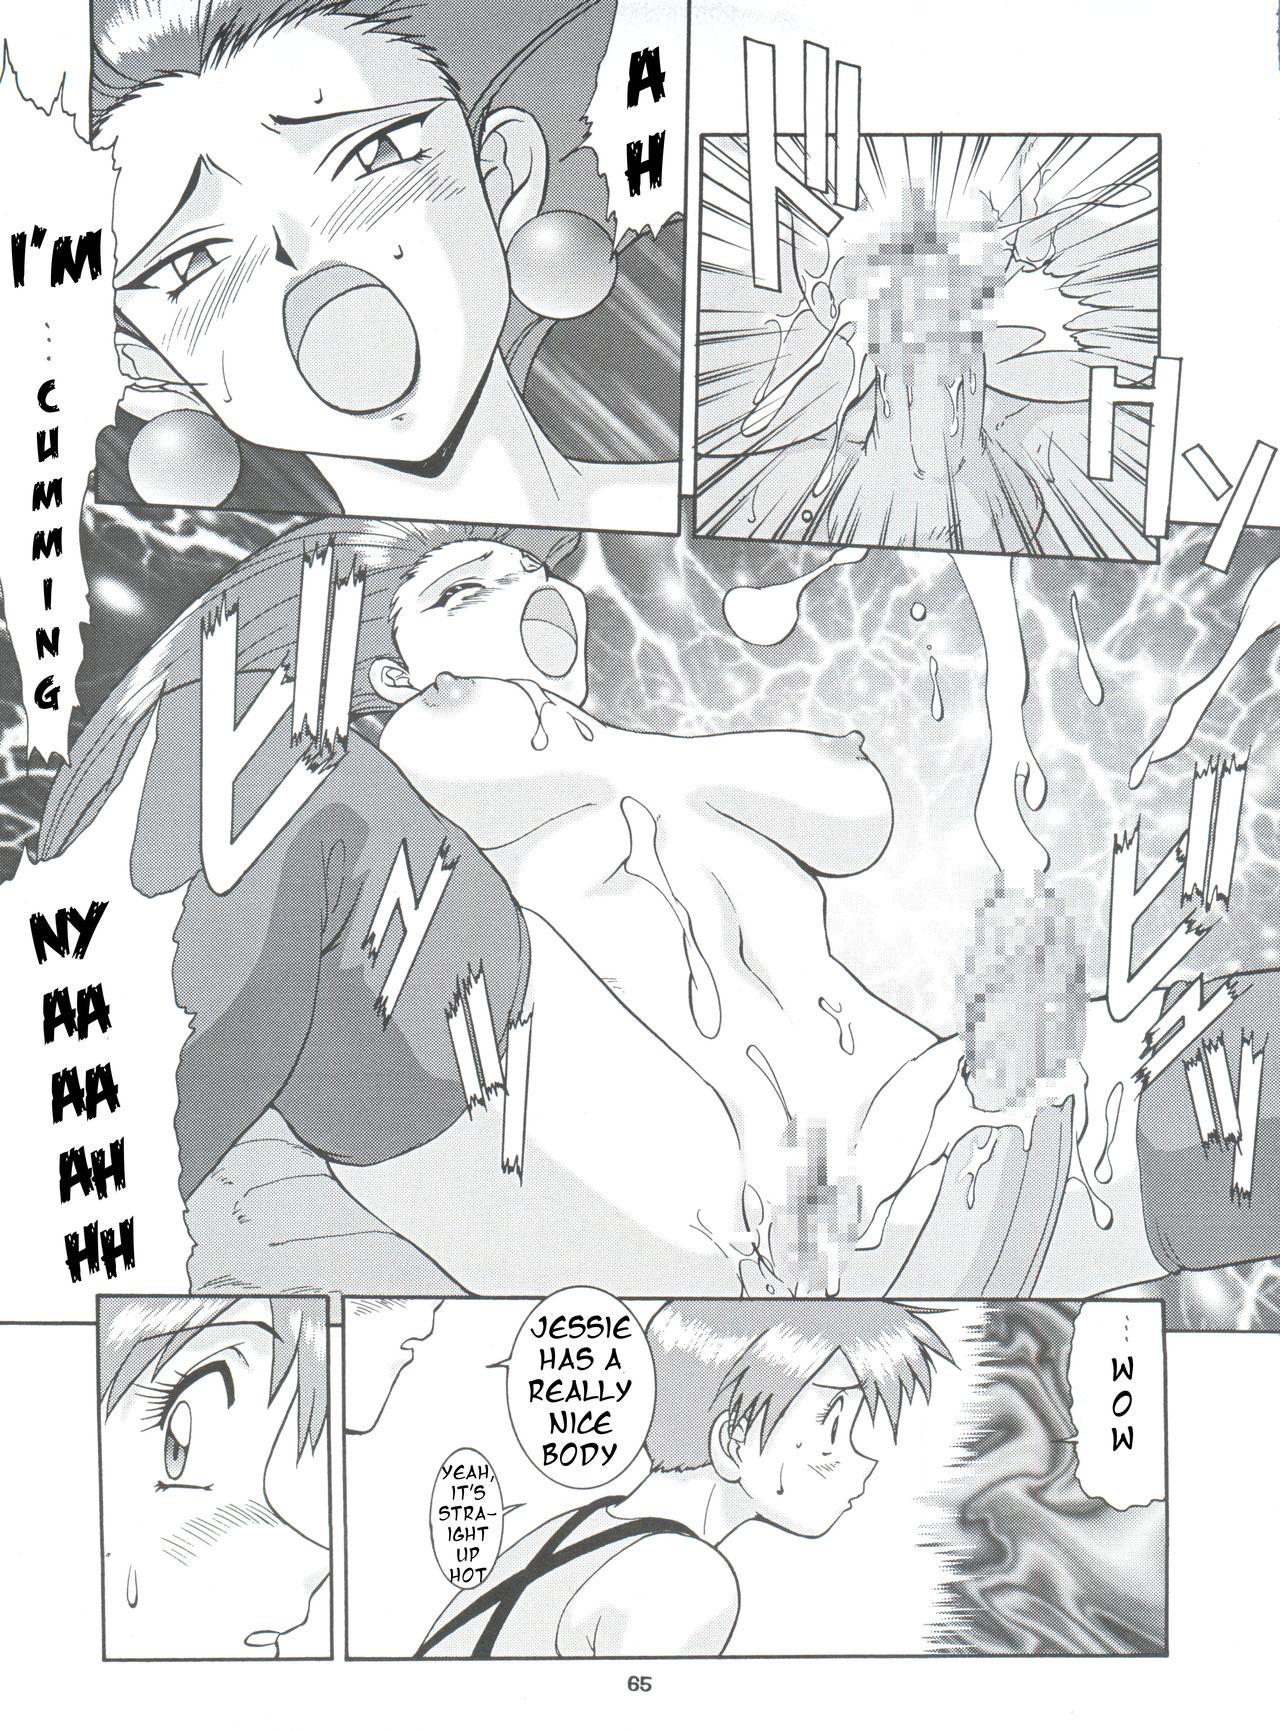 Ass Sex Pokemoso - Pokemon | pocket monsters Imvu - Page 6